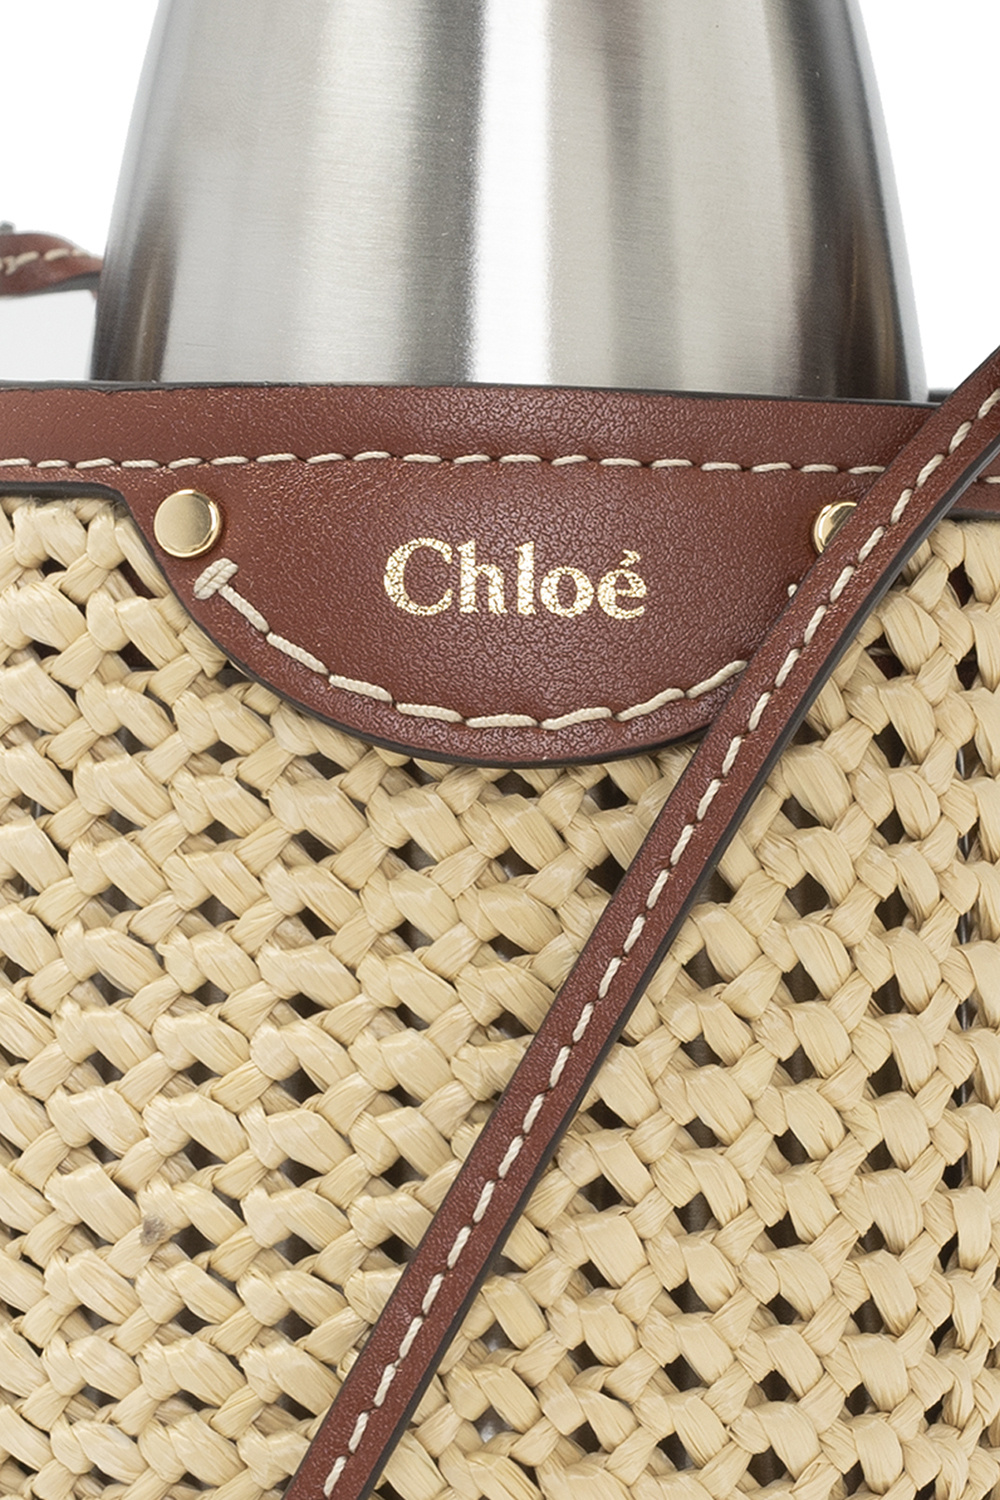 Chloé Pure Luxuries London Chloe Silver